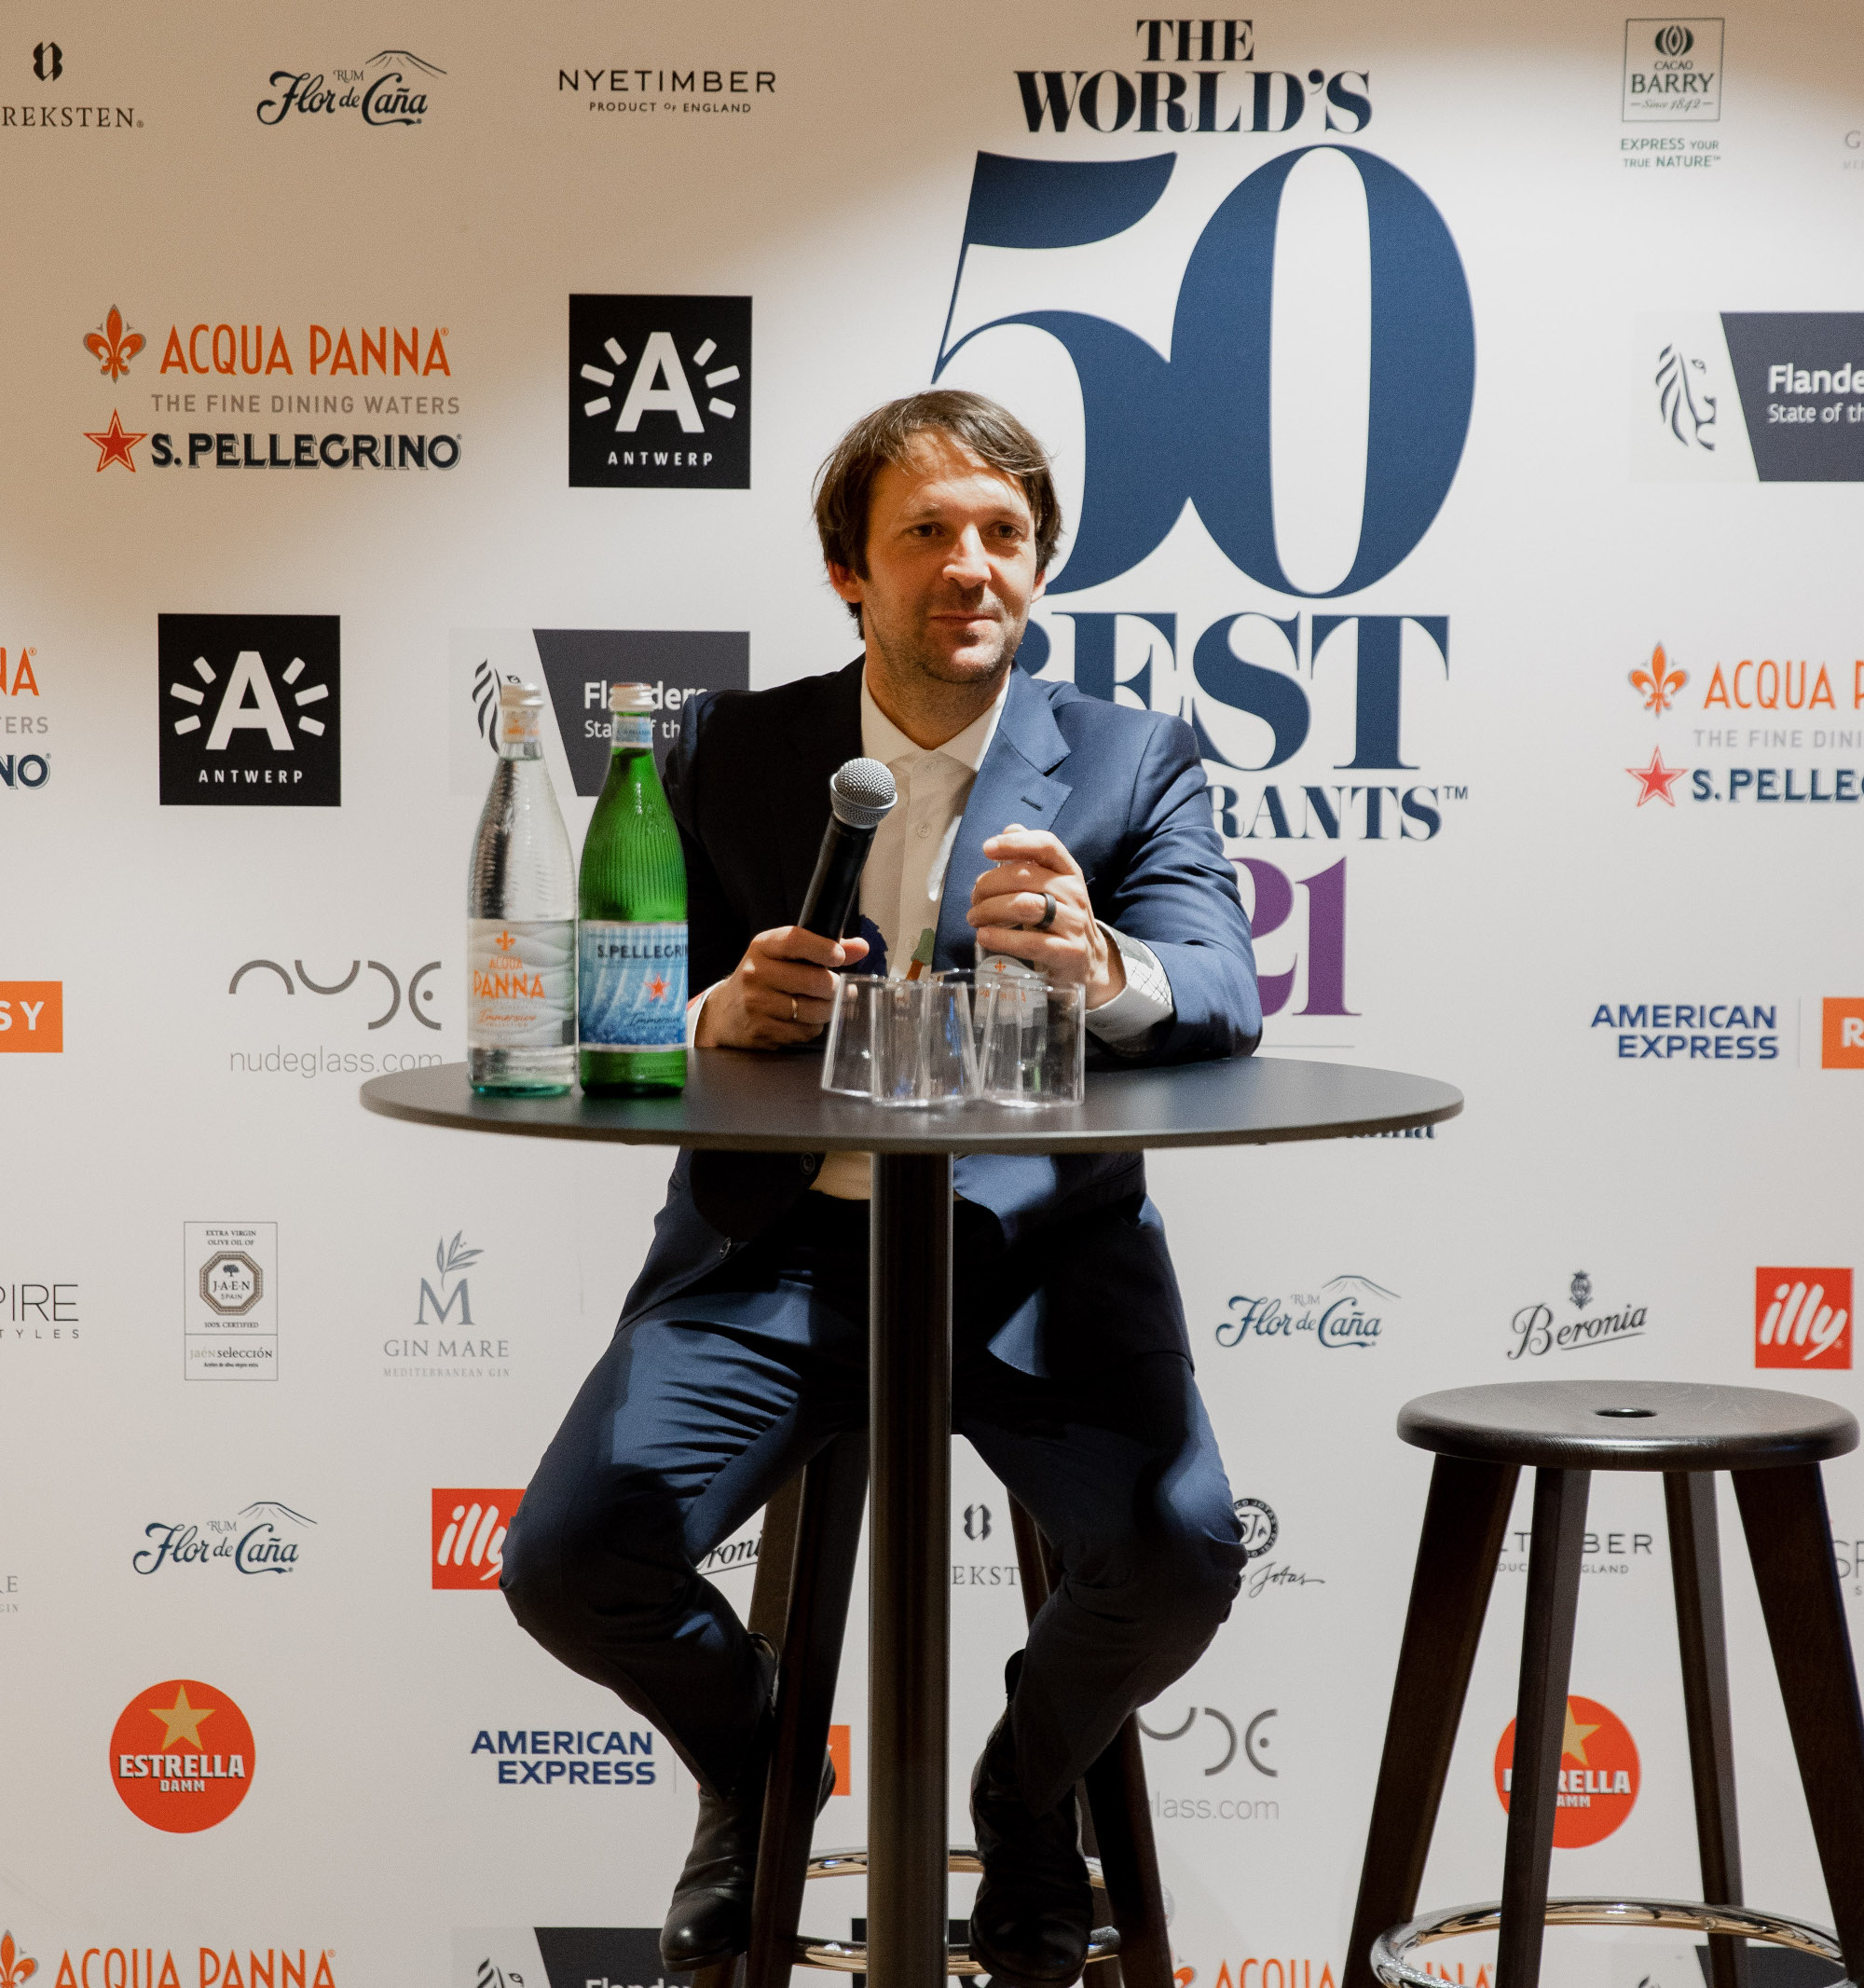 Noma's René Redzepi at the World's 50 Best Resturants awards